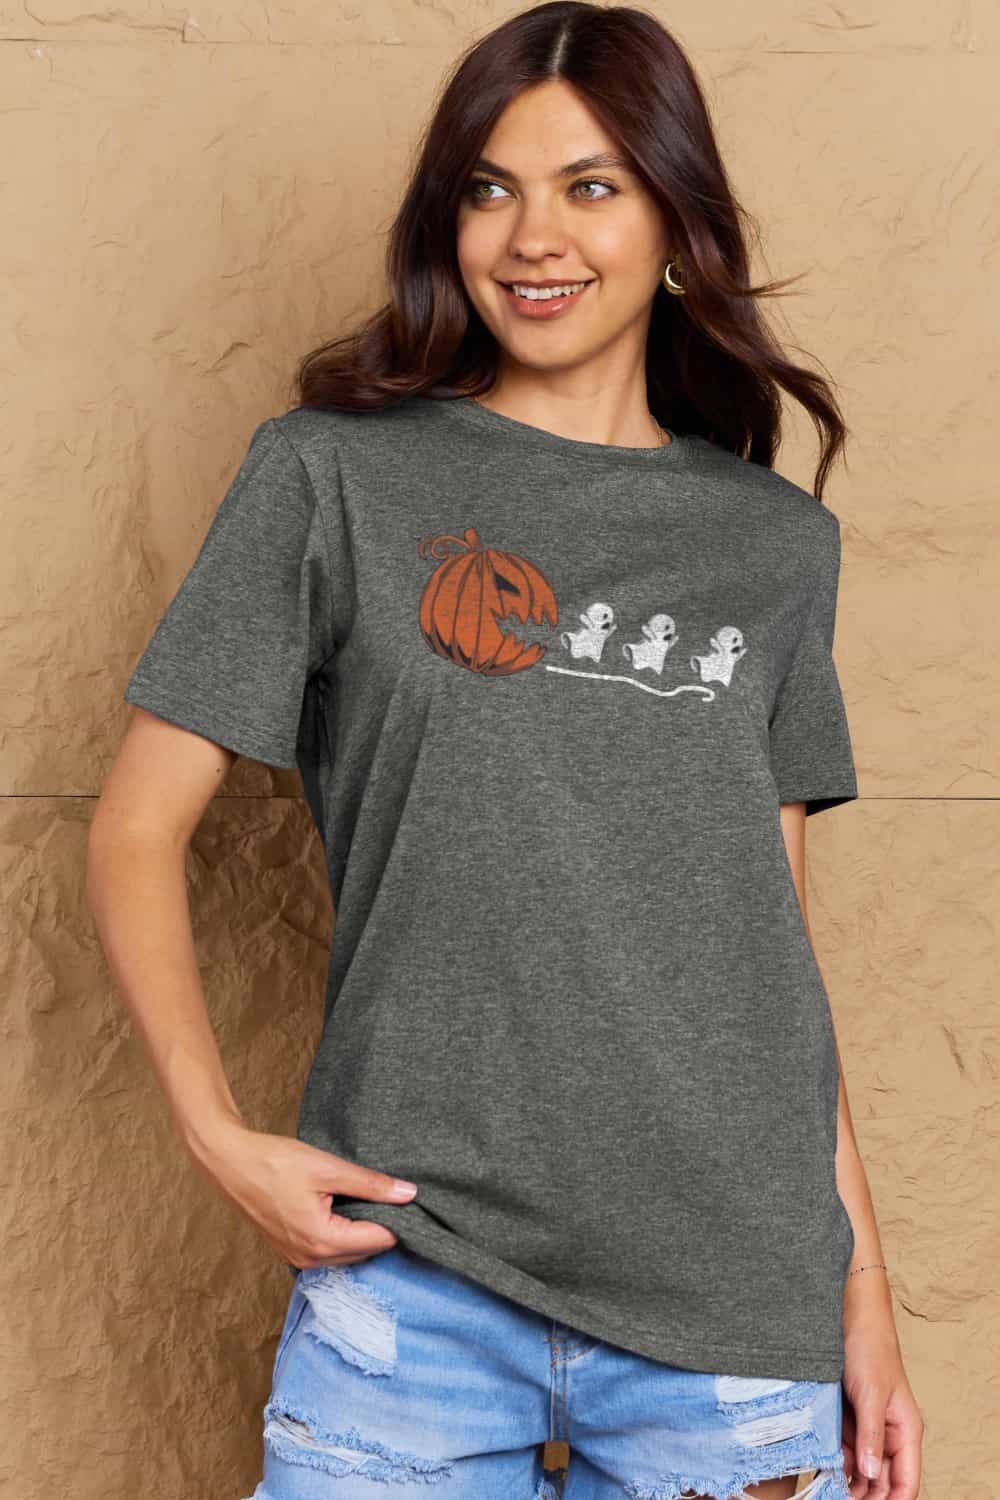 Full Size Jack-O’-Lantern Graphic Cotton T-Shirt - Gray / S - T-Shirts - Shirts & Tops - 1 - 2024